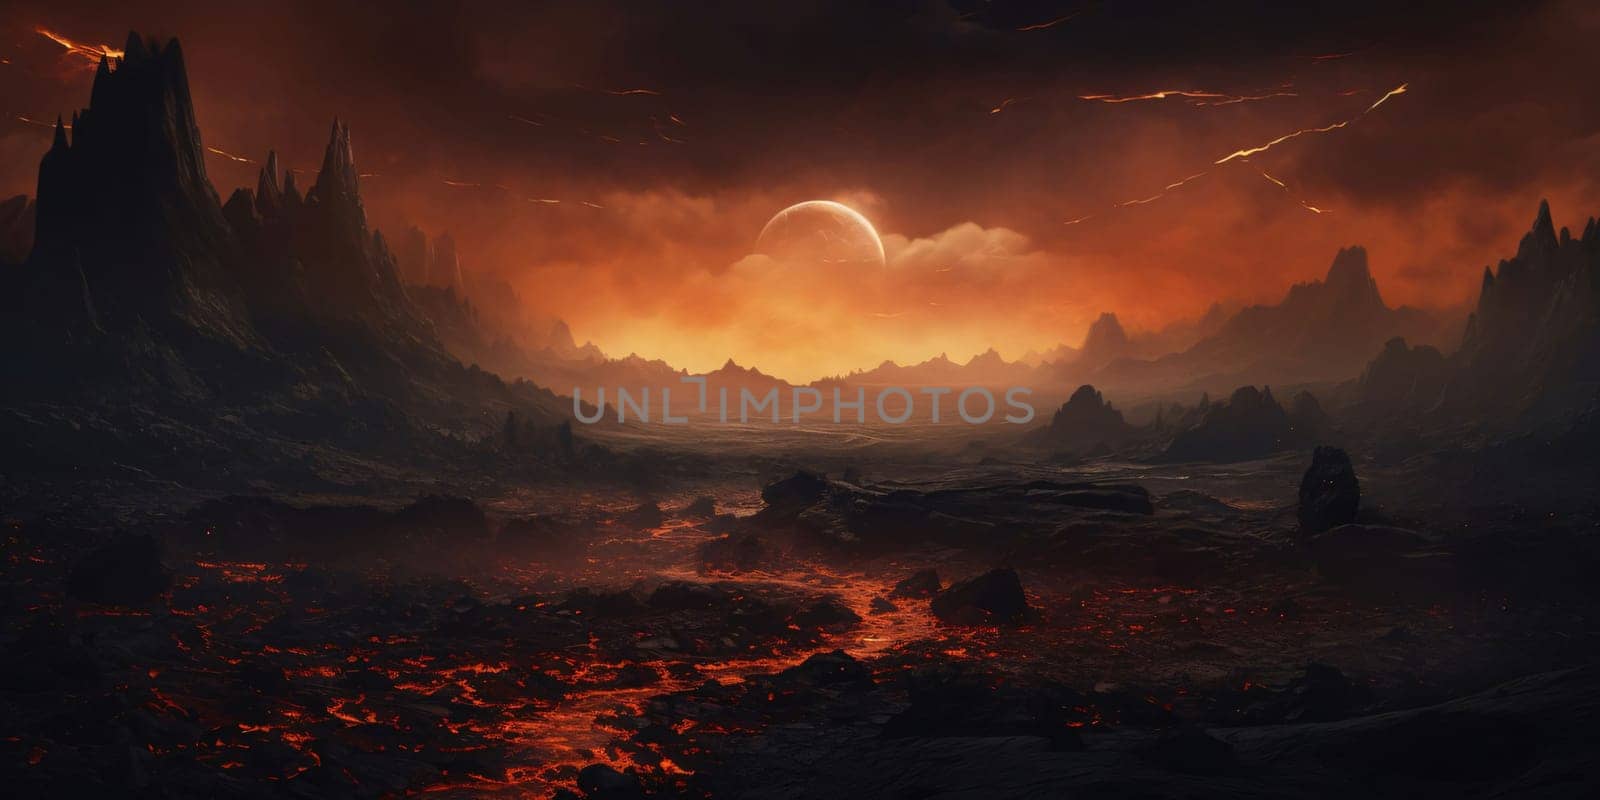 Banner: Fantasy alien planet. Mountain and lake. 3D illustration.